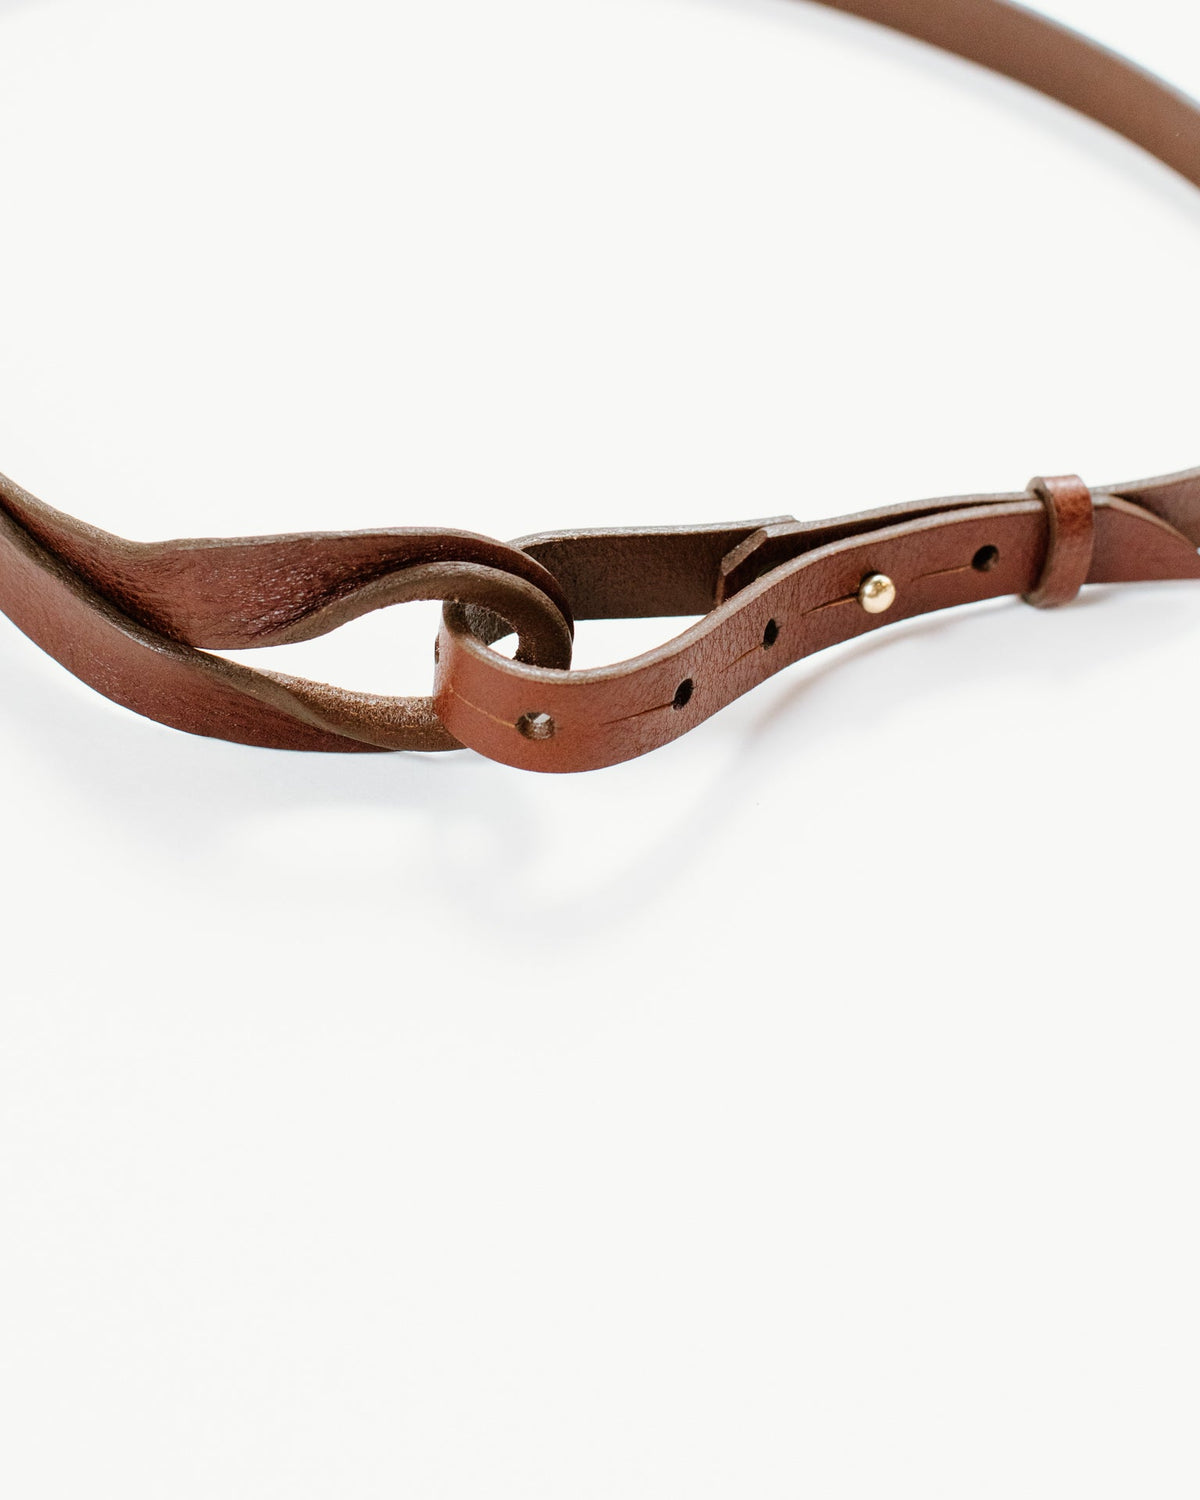 Depalma Handsewn Accessories Nuova 3/4 inch Single Wrap in Bark/Brass